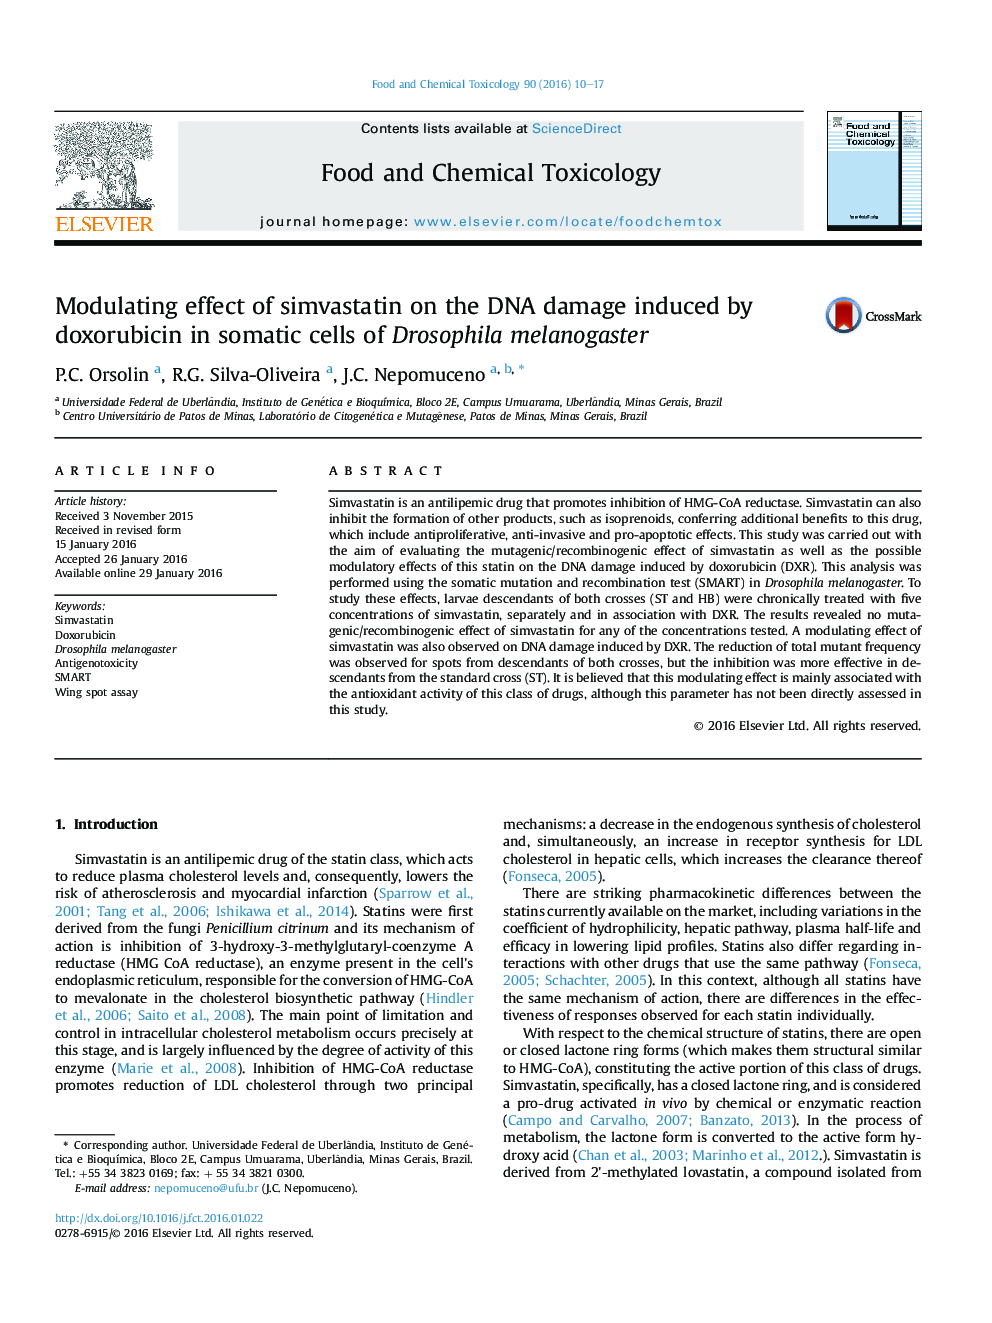 Modulating effect of simvastatin on the DNA damage induced by doxorubicin in somatic cells of Drosophila melanogaster